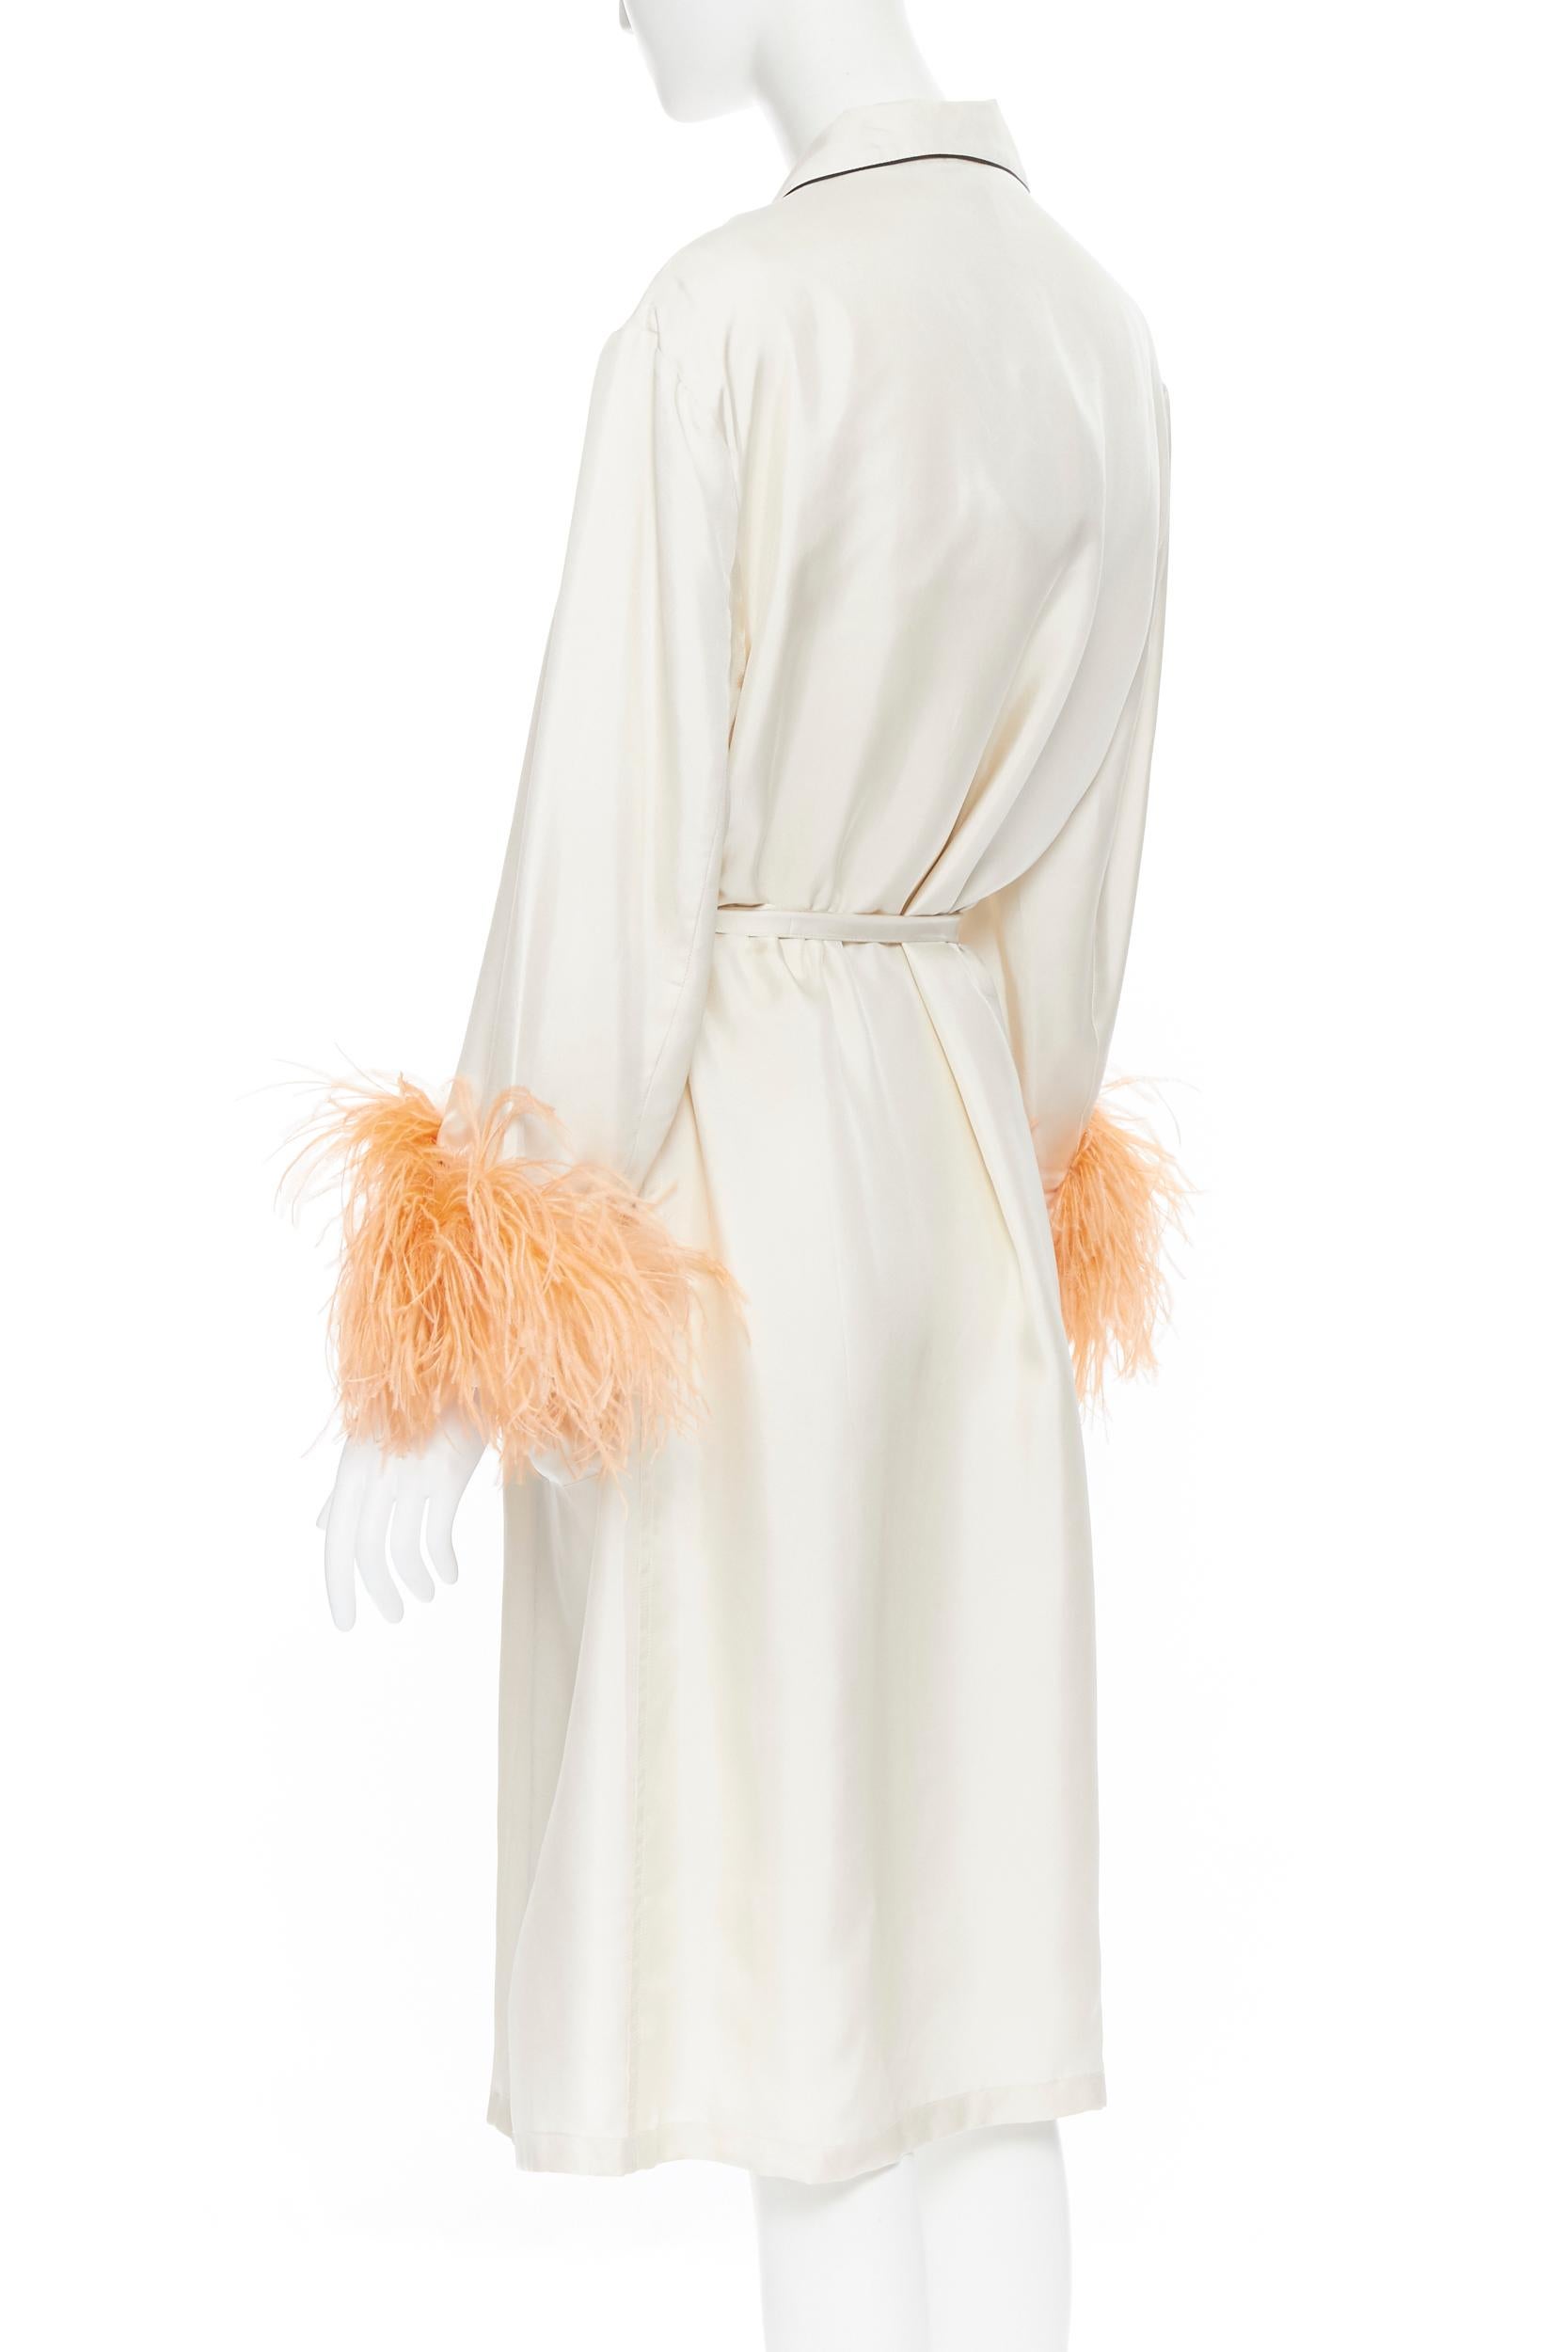 new PRADA 100% silk cream black piping orange feather cuff robe jacket Rihanna M 2